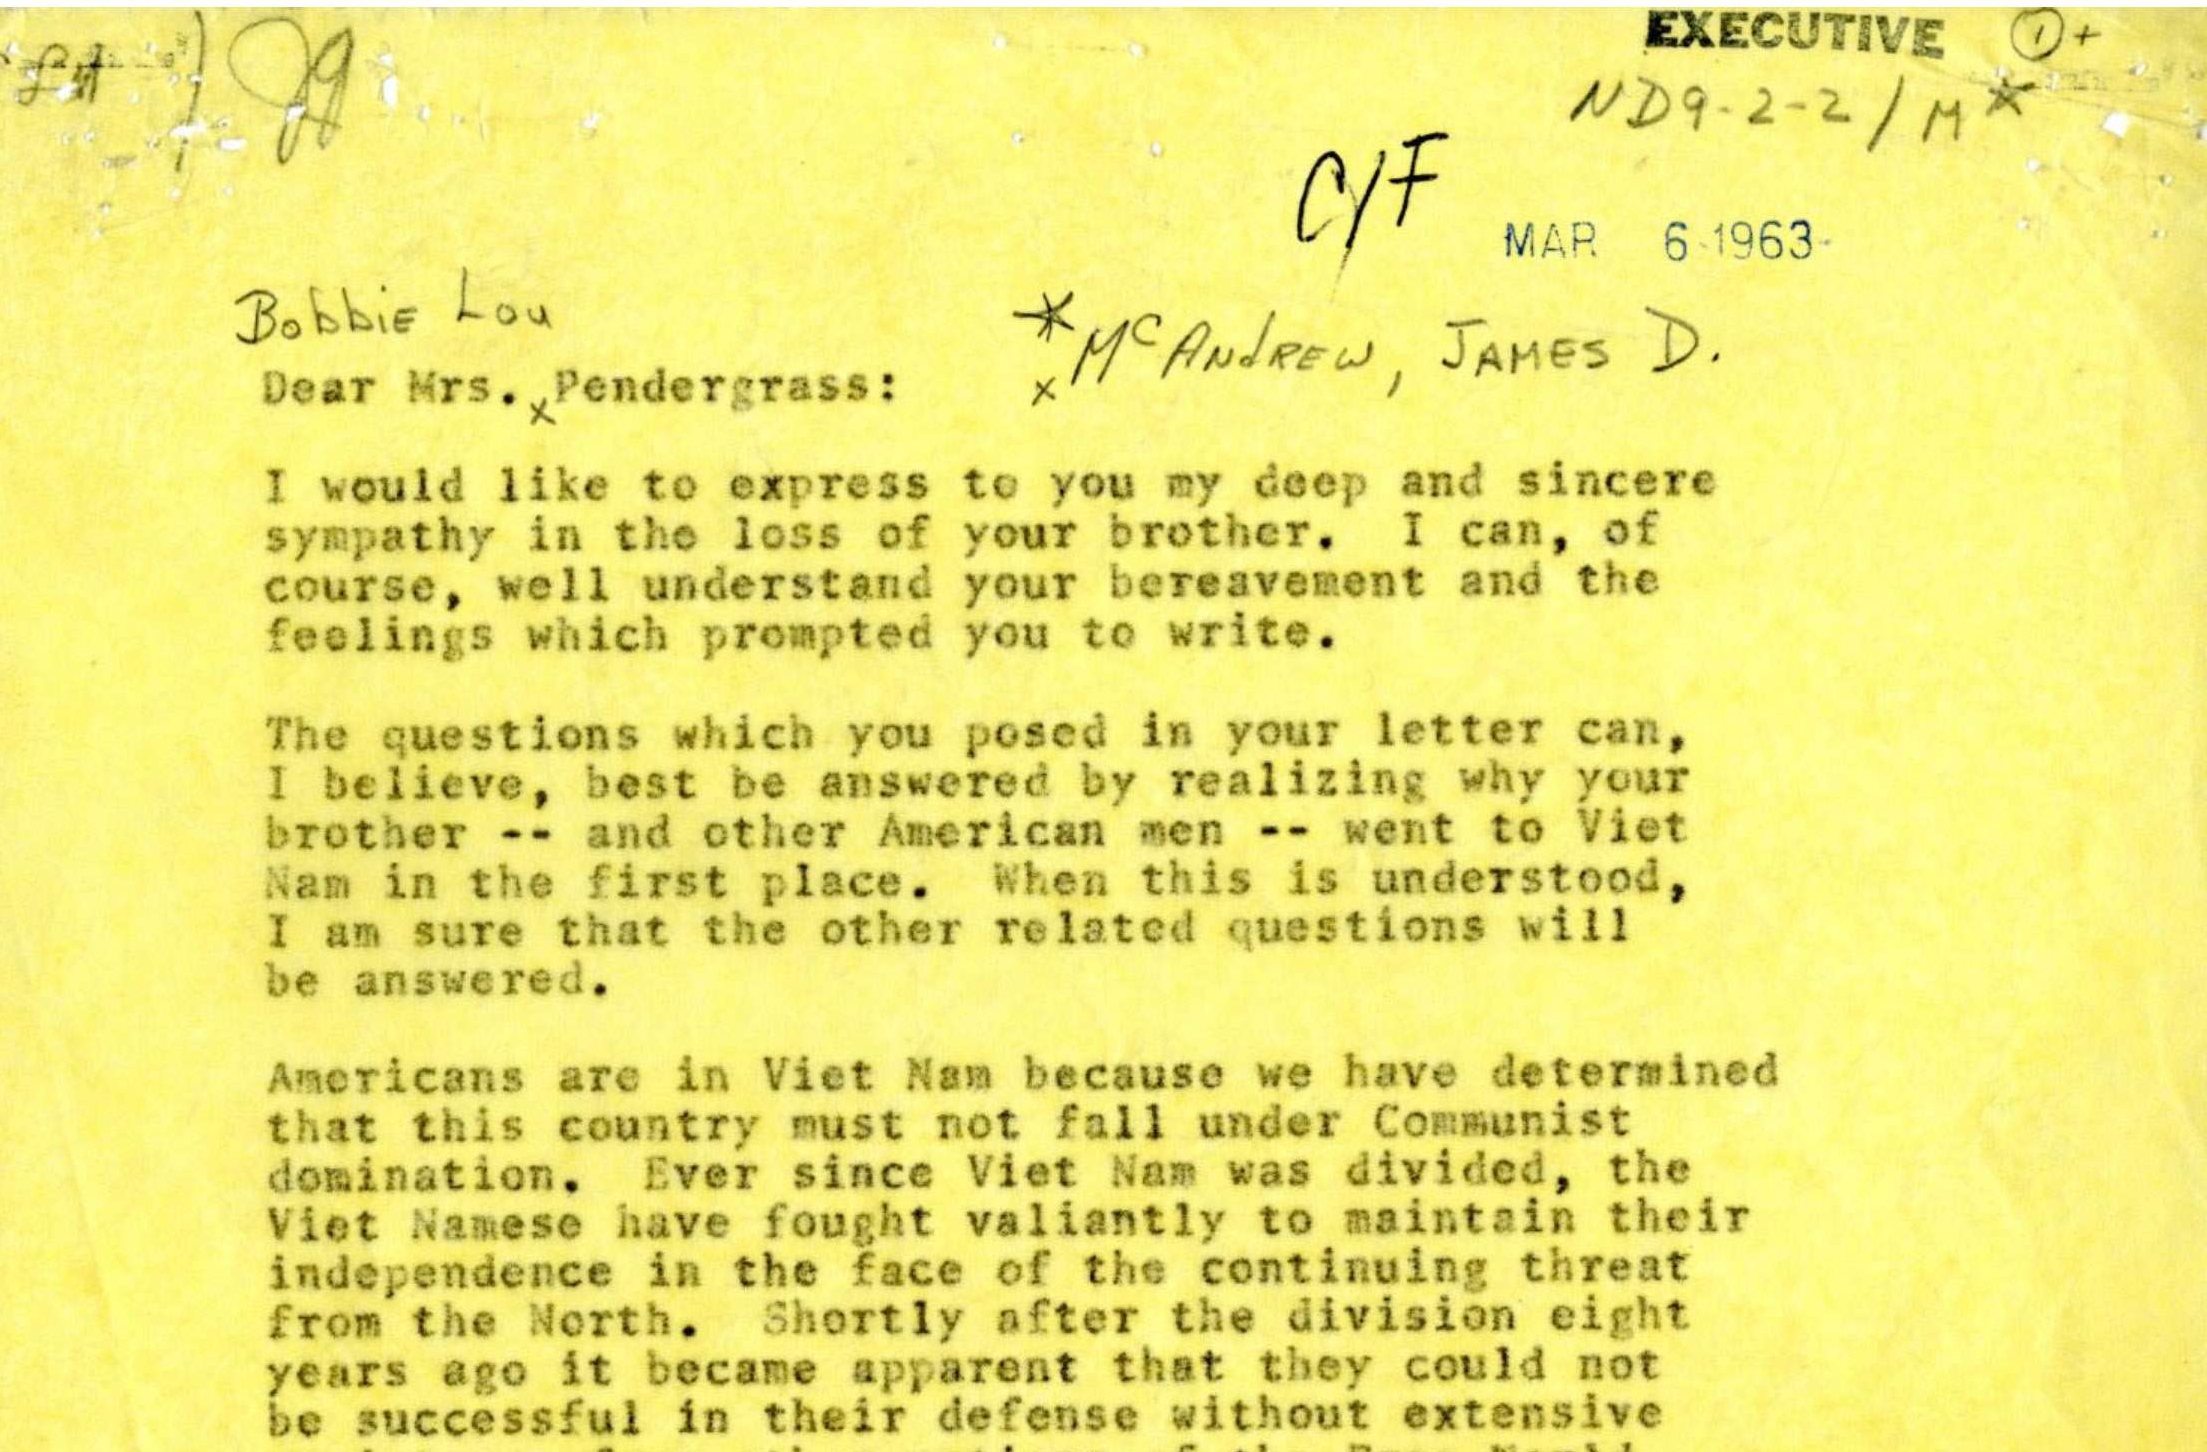 Letter from President Kennedy to Bobbie Lou Pendergrass